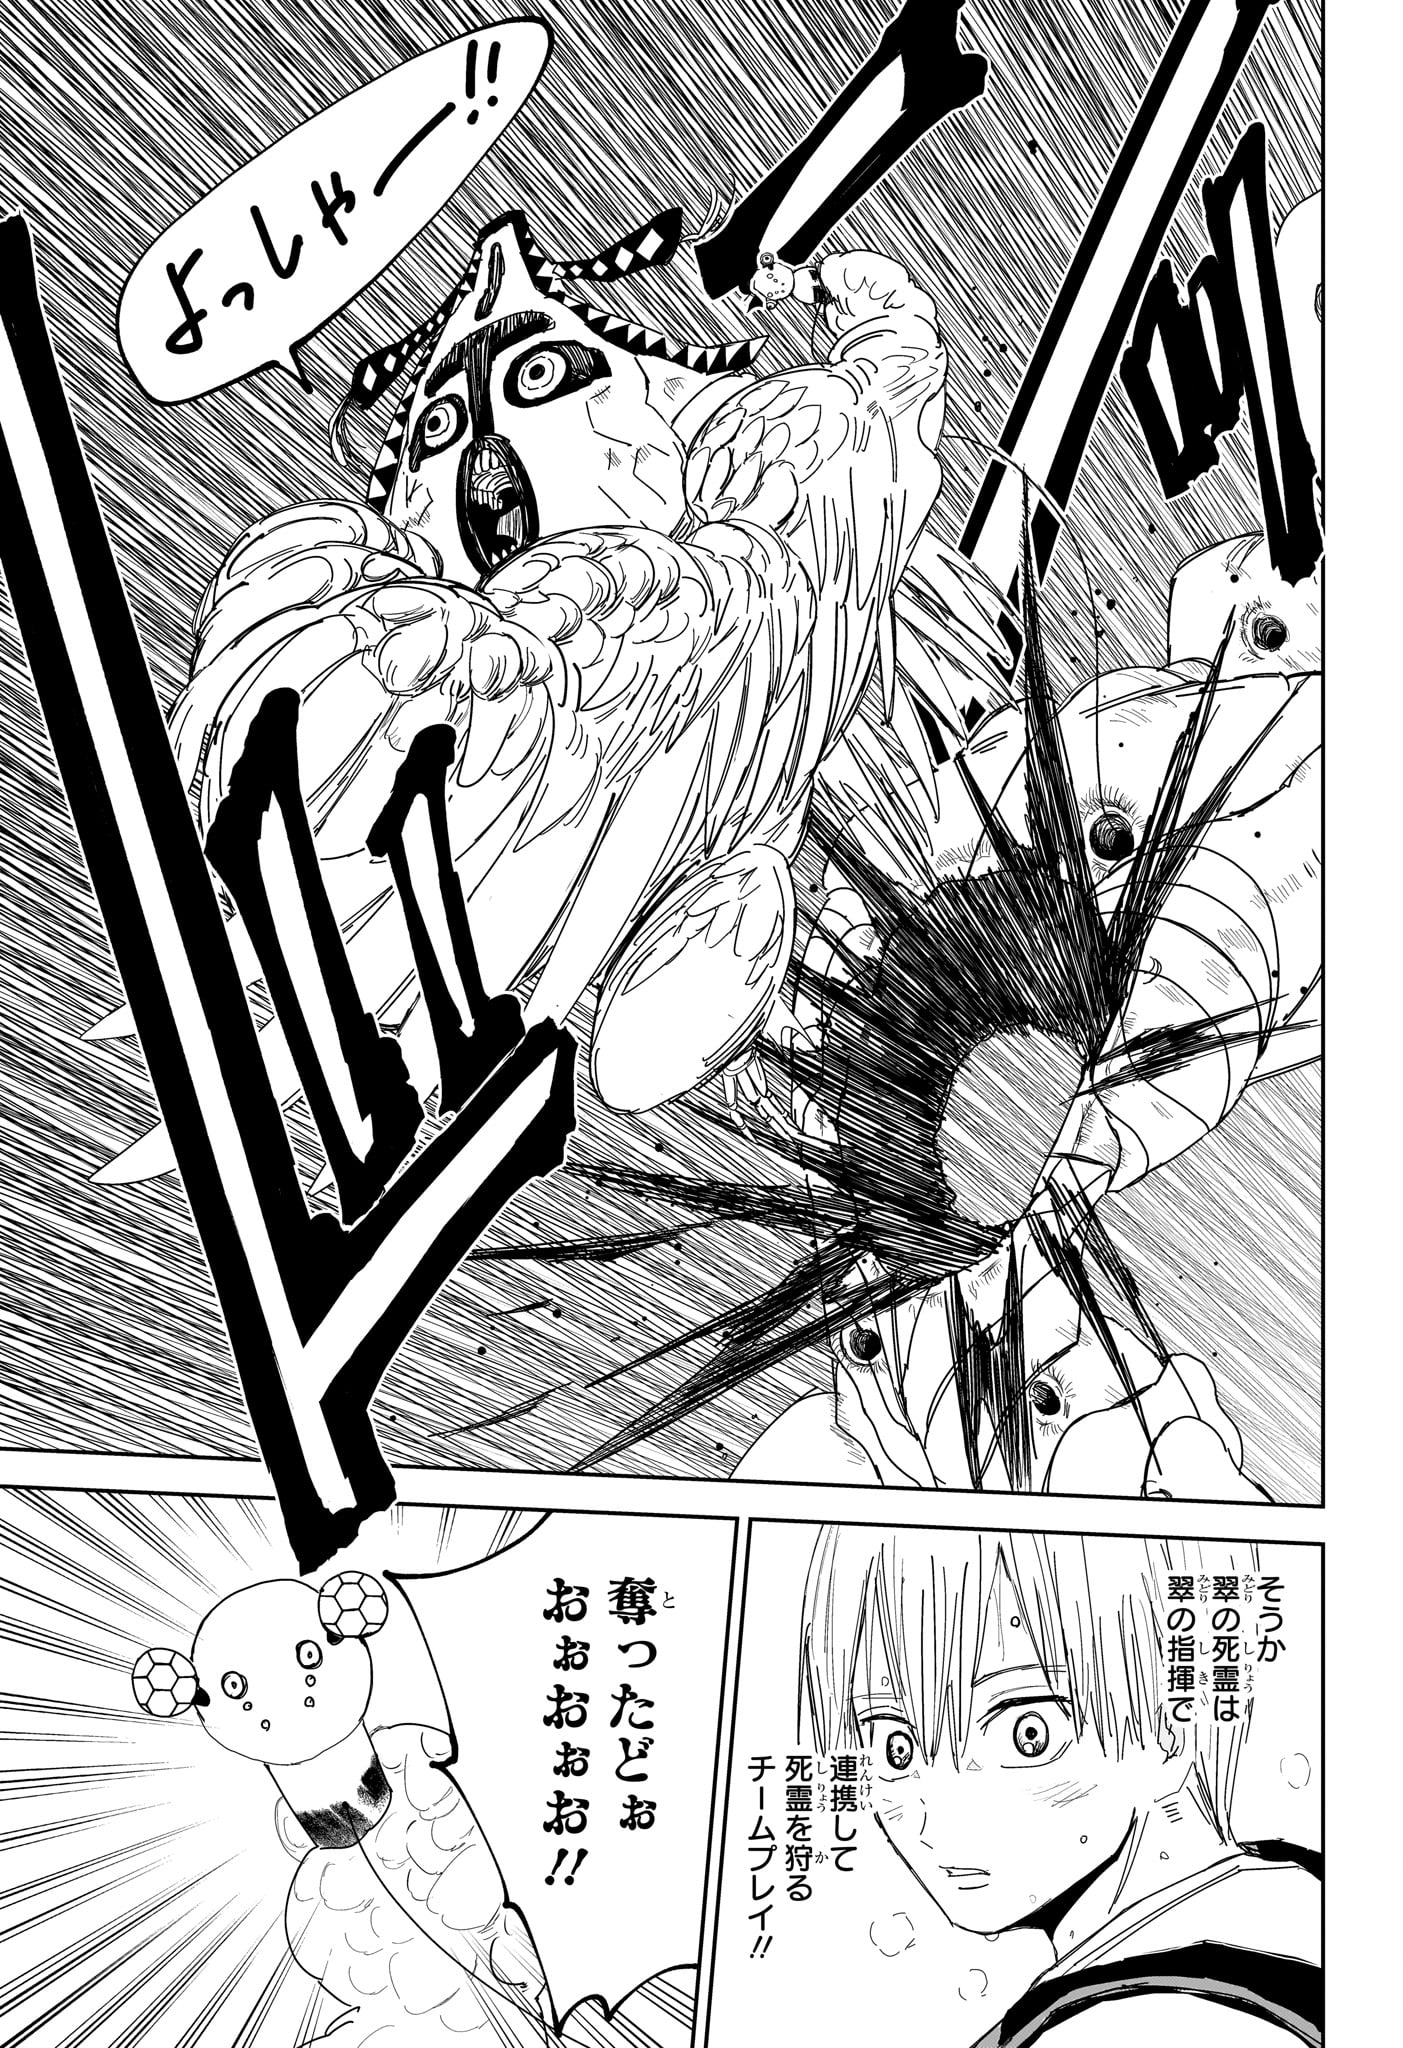 Kyokuto Necromance - Chapter 8 - Page 13